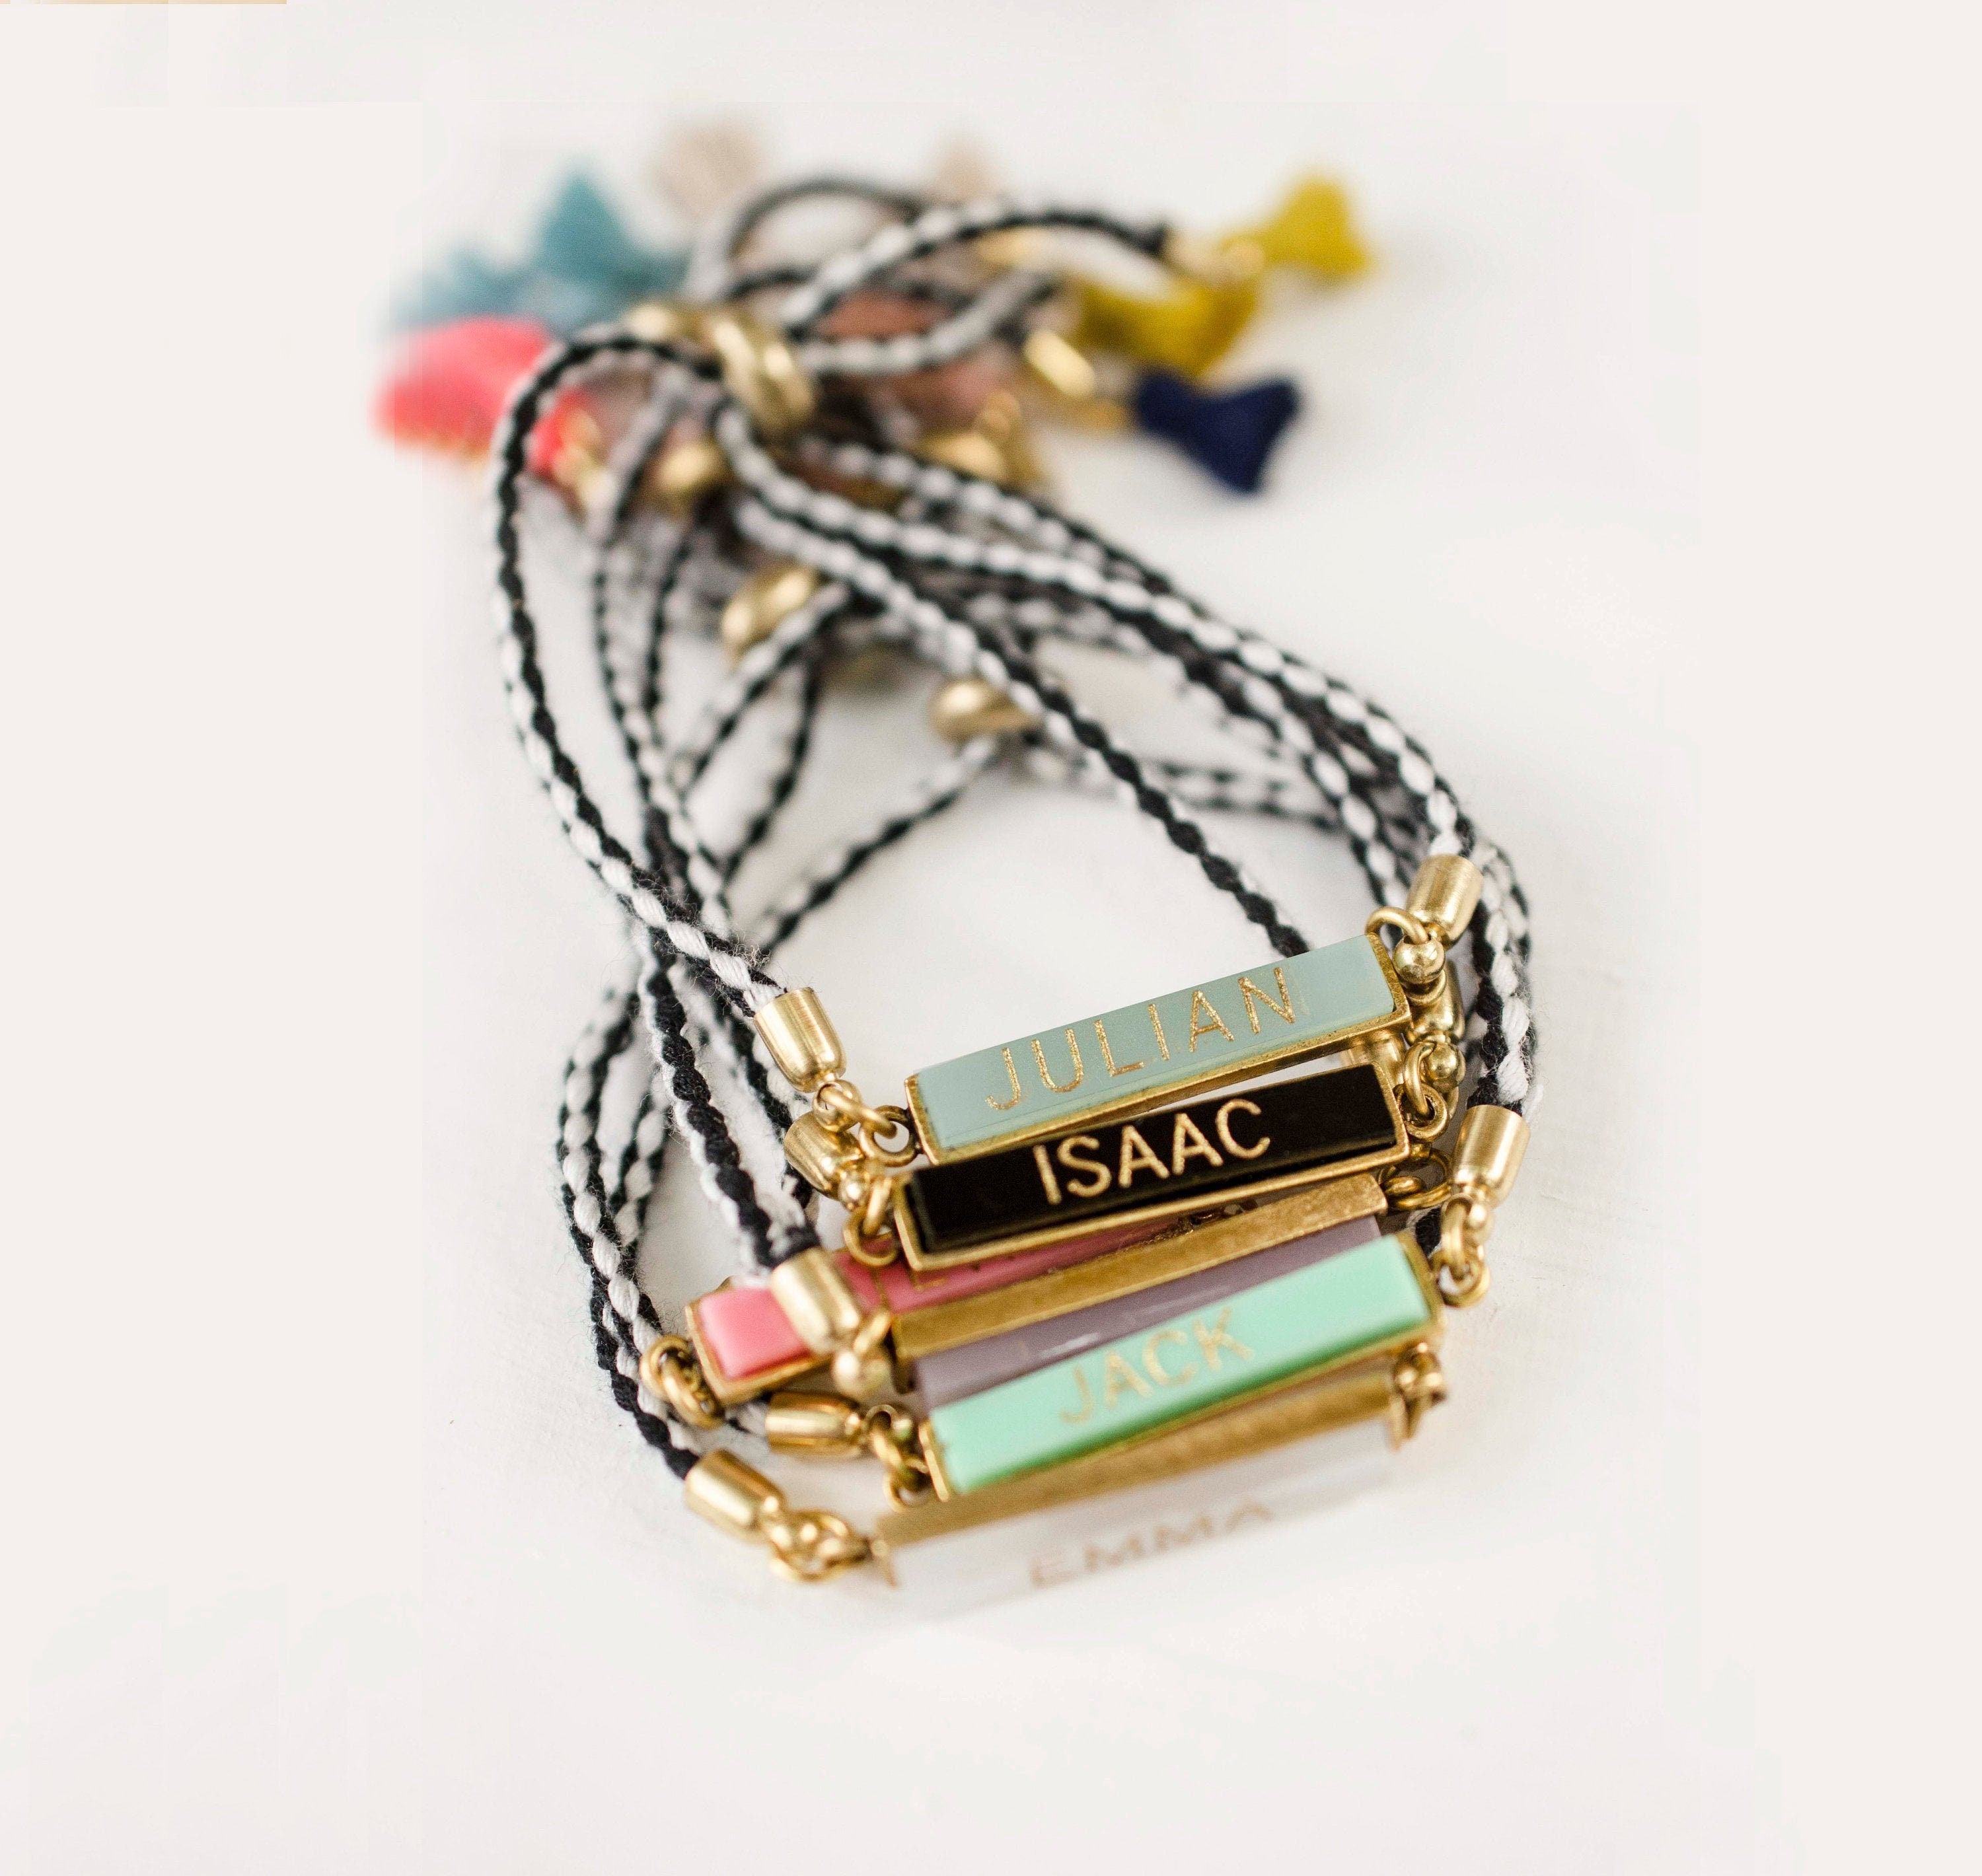 Personalized Heart Charm Bracelet with Kids Names - Heartfelt Tokens